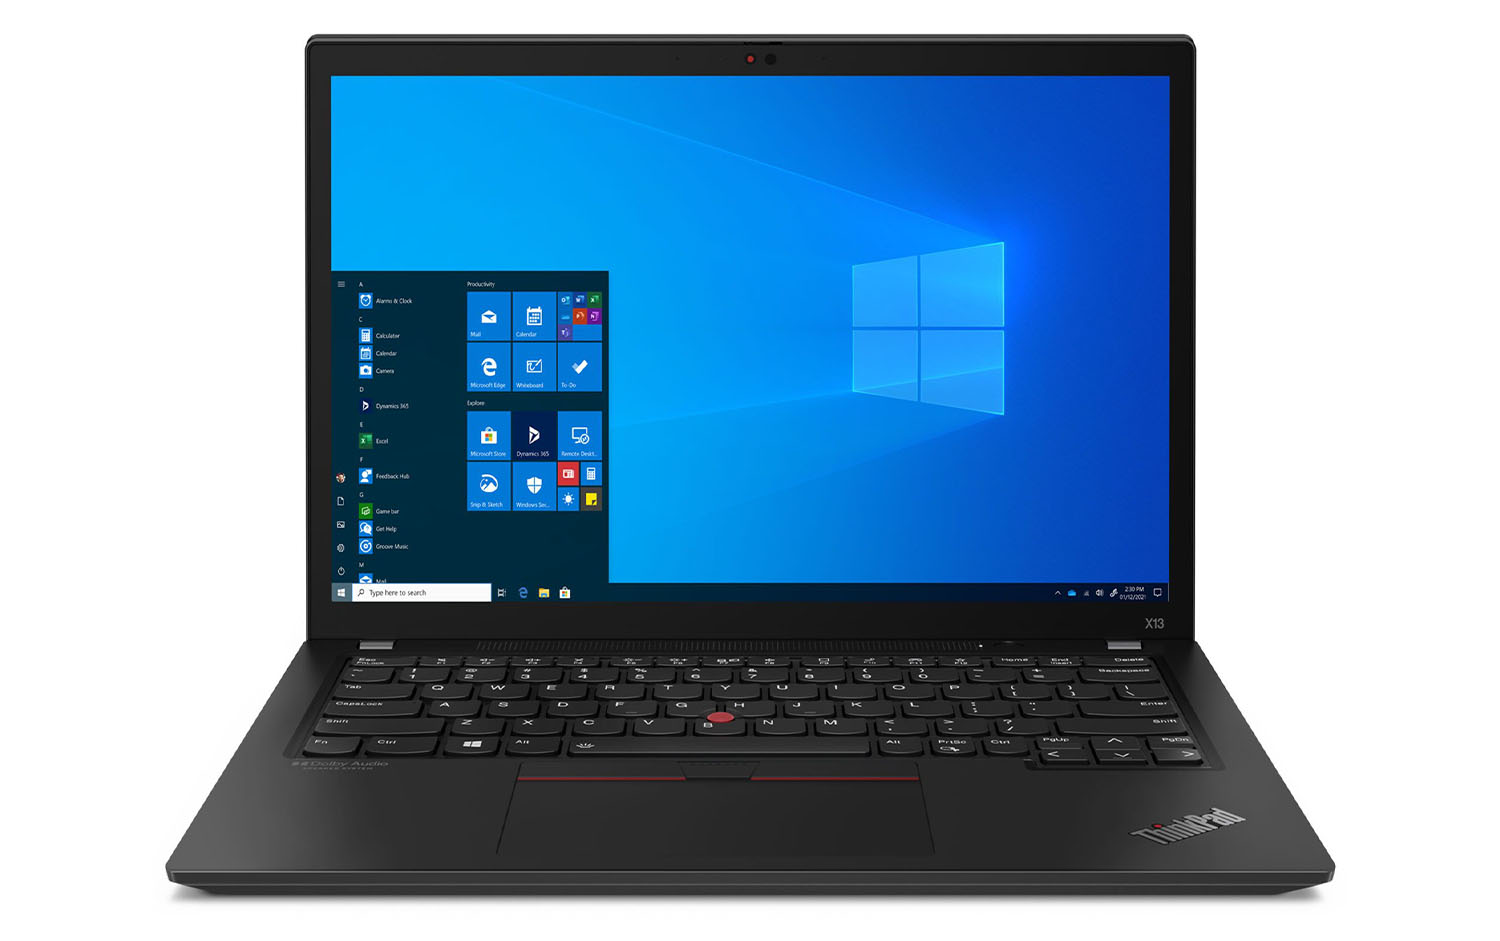 Lenovo ThinkPad X13 Gen 1 Intel Core i5 10th Gen 16GB RAM 256GB SSD Touchscreen Windows 10 Pro